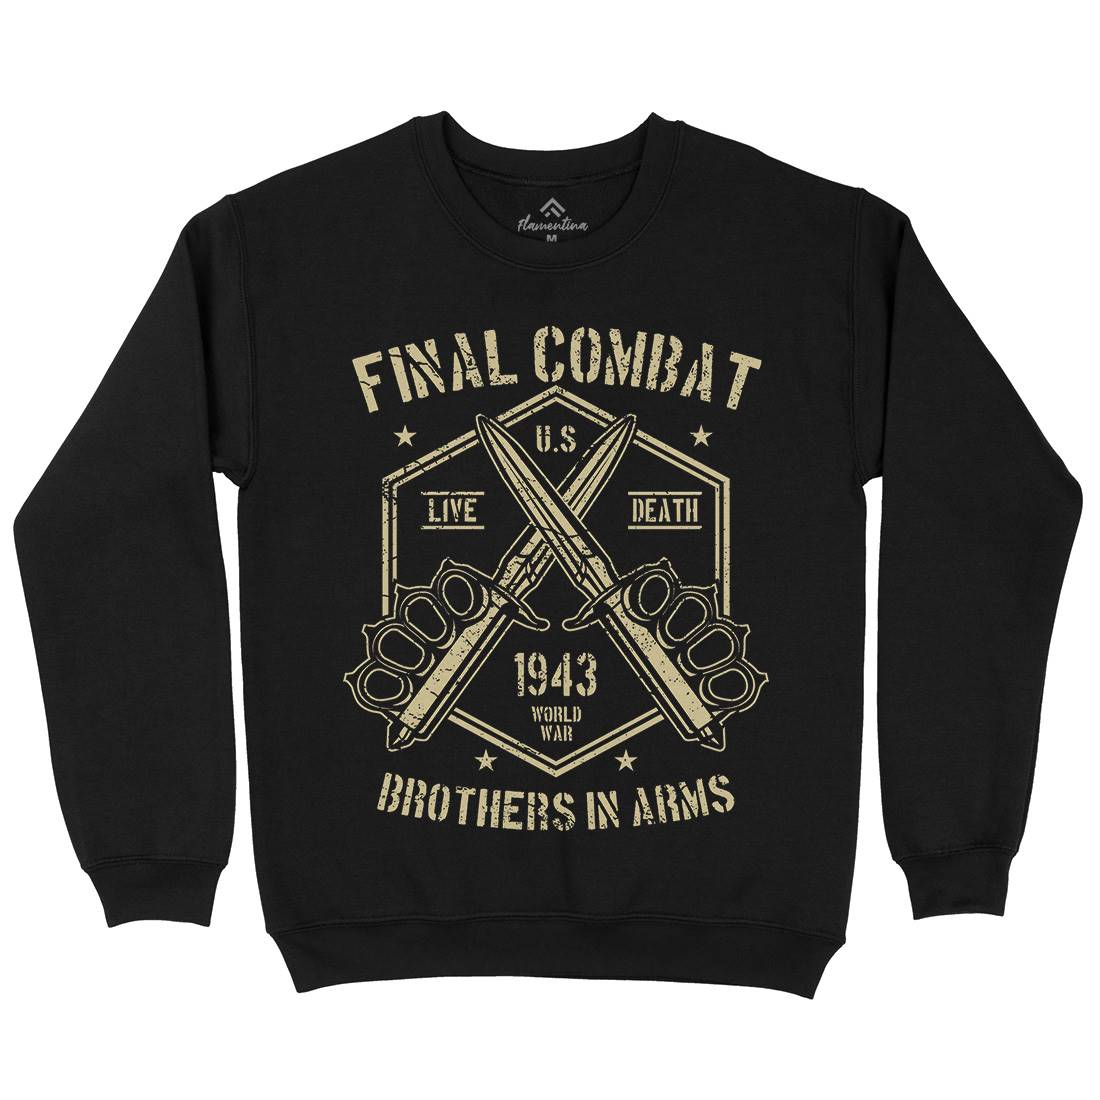 Final Combat Kids Crew Neck Sweatshirt Army A052